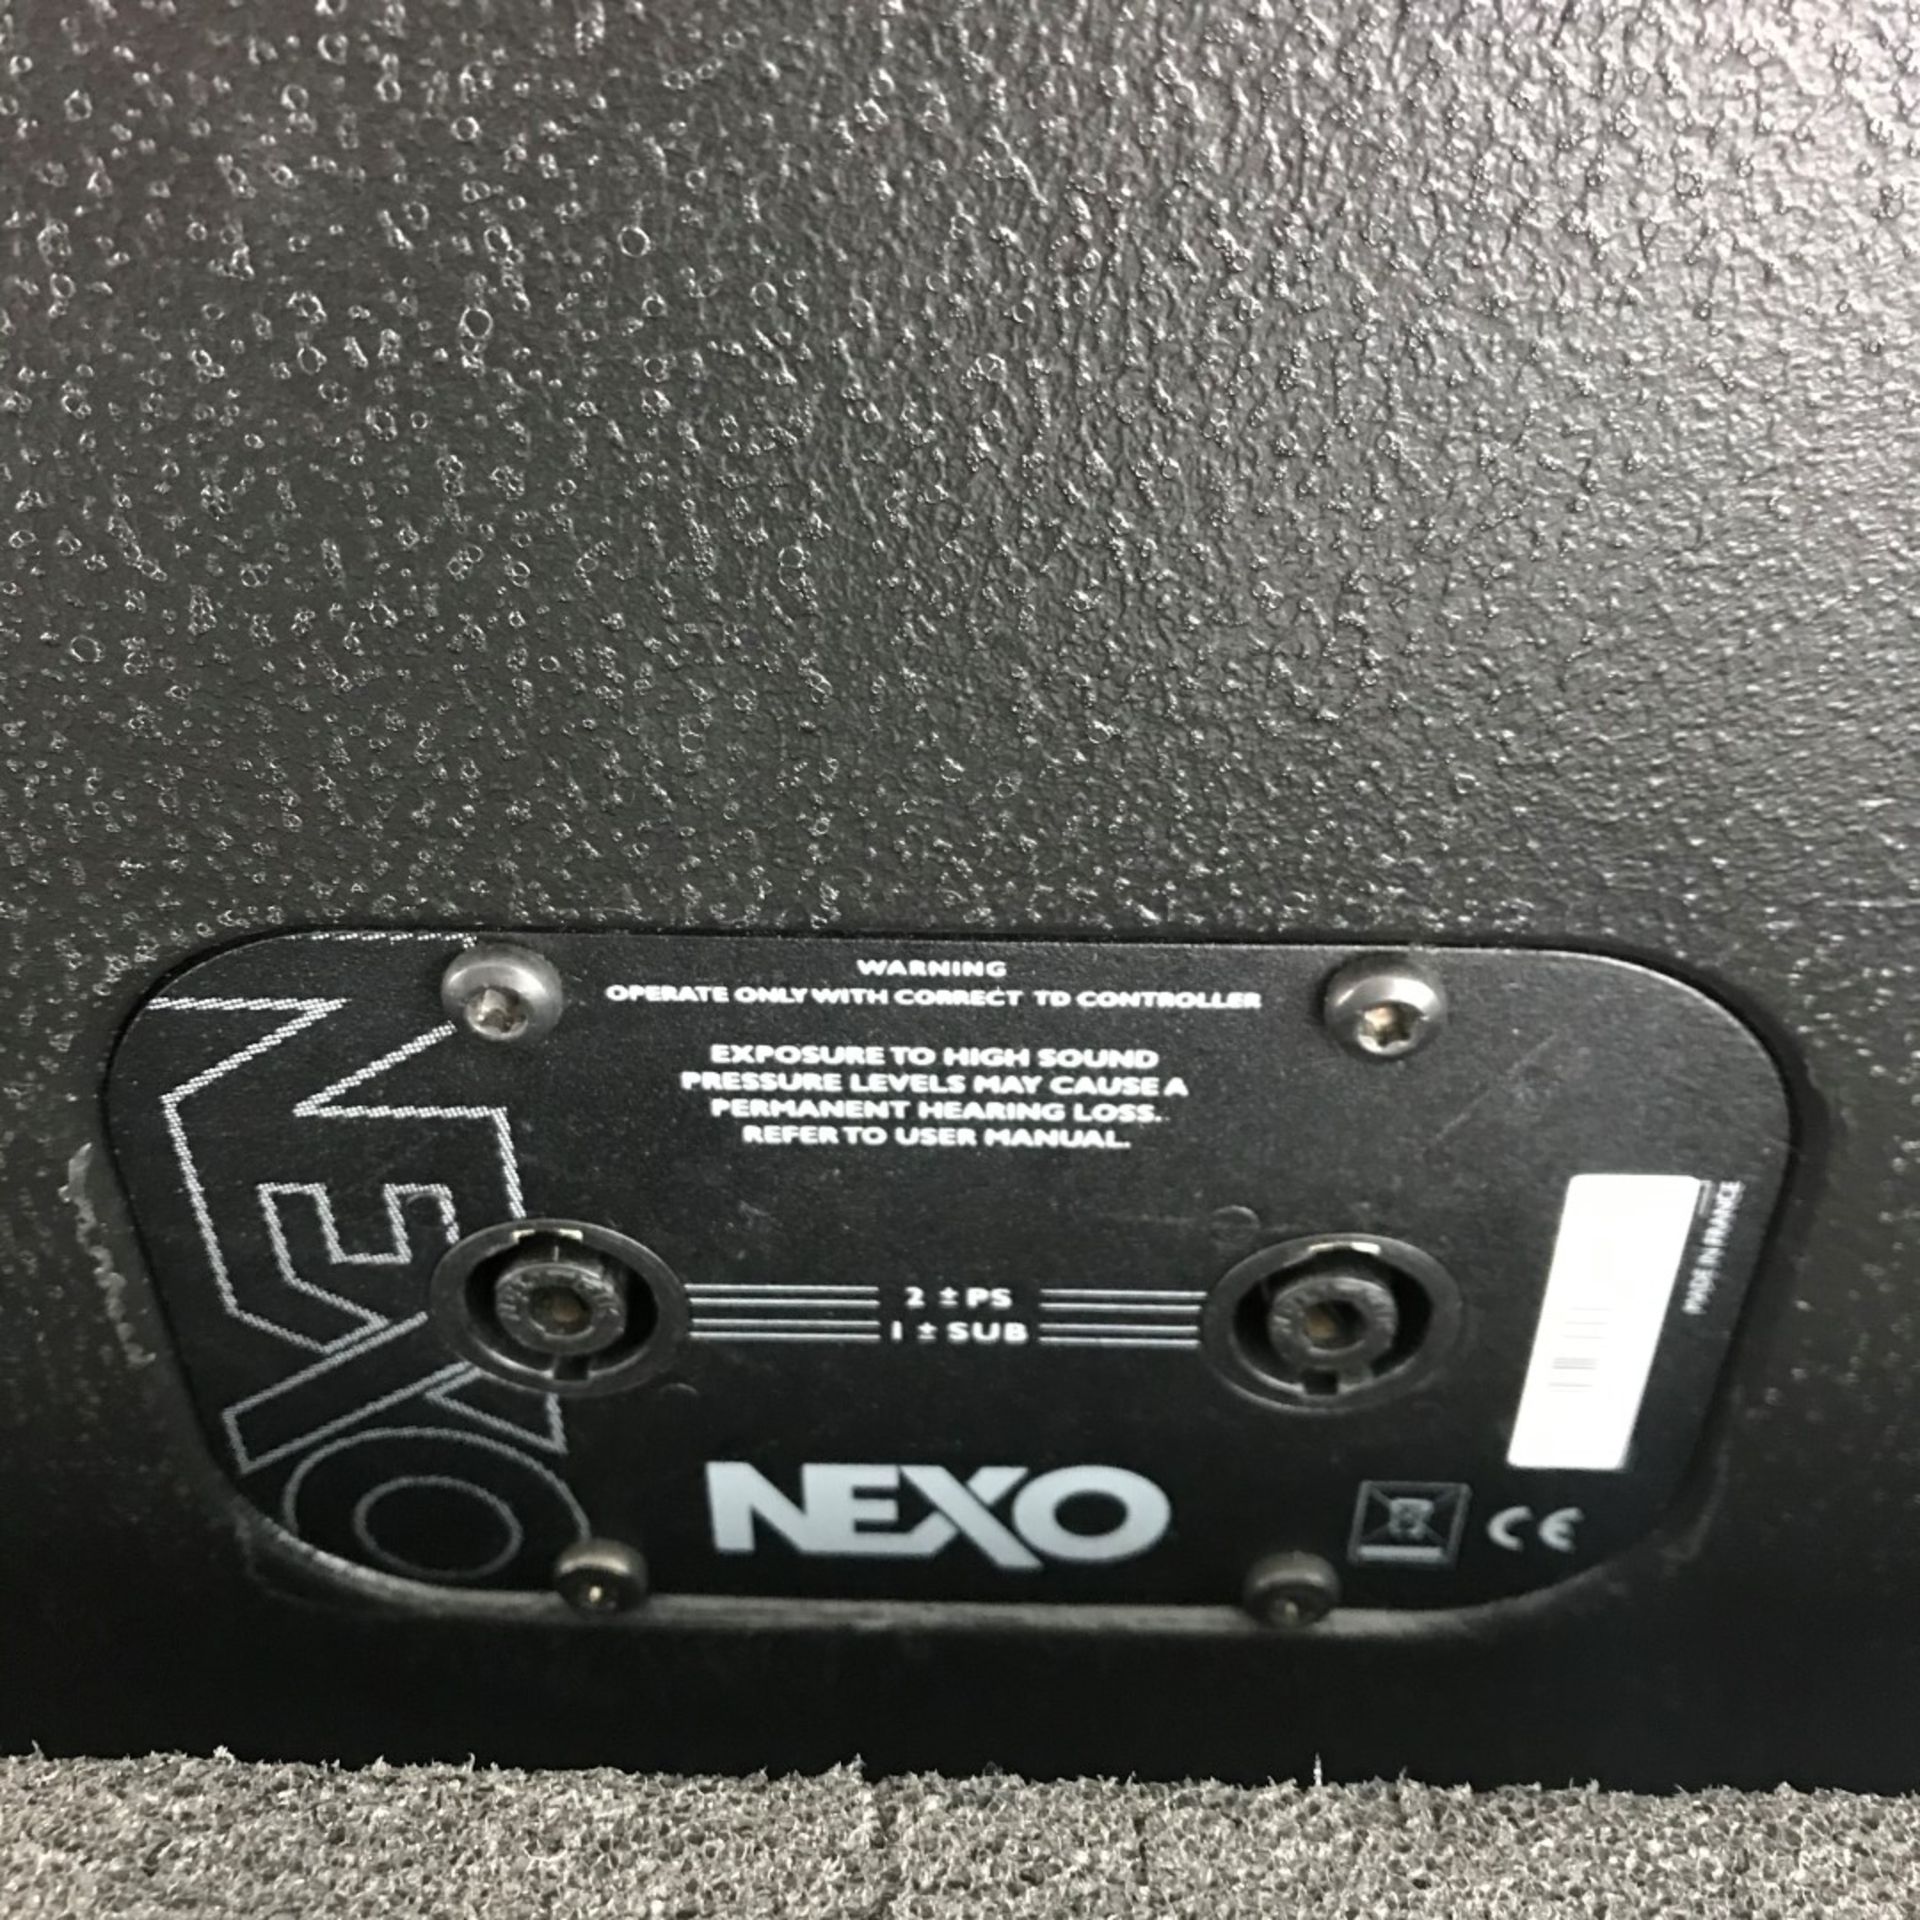 1 x Nexo LS1800 Bass Bin Speaker In Flight Case - Ref: 116 - CL581 - Location: Altrincham WA14 - Image 2 of 2